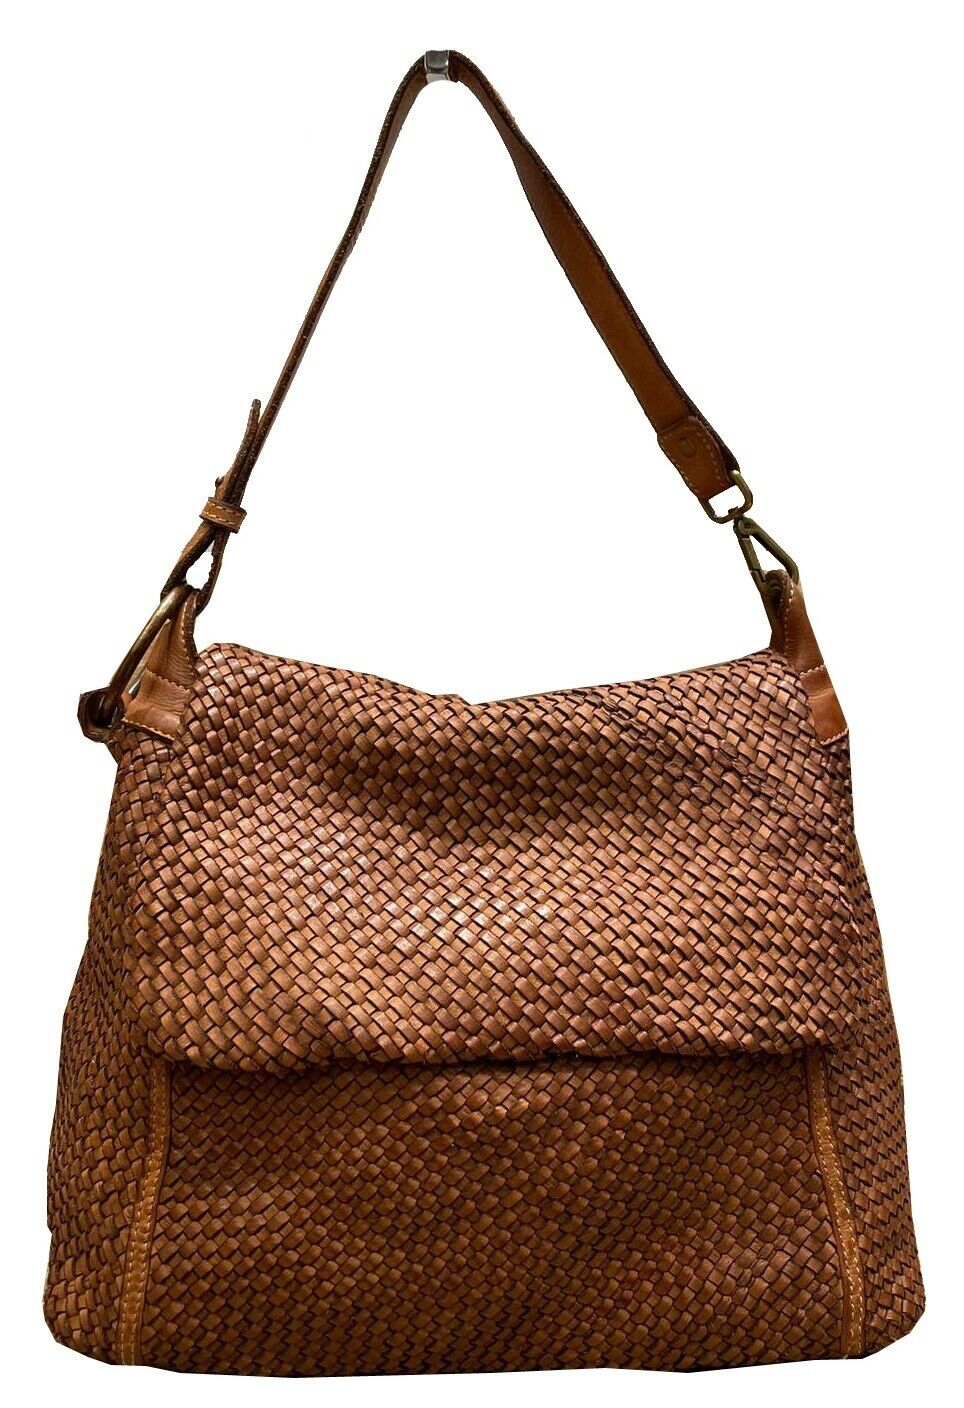 BZNA Bag Tarja Cognac Italy Designer Messenger Damen Handtasche Schultertasche